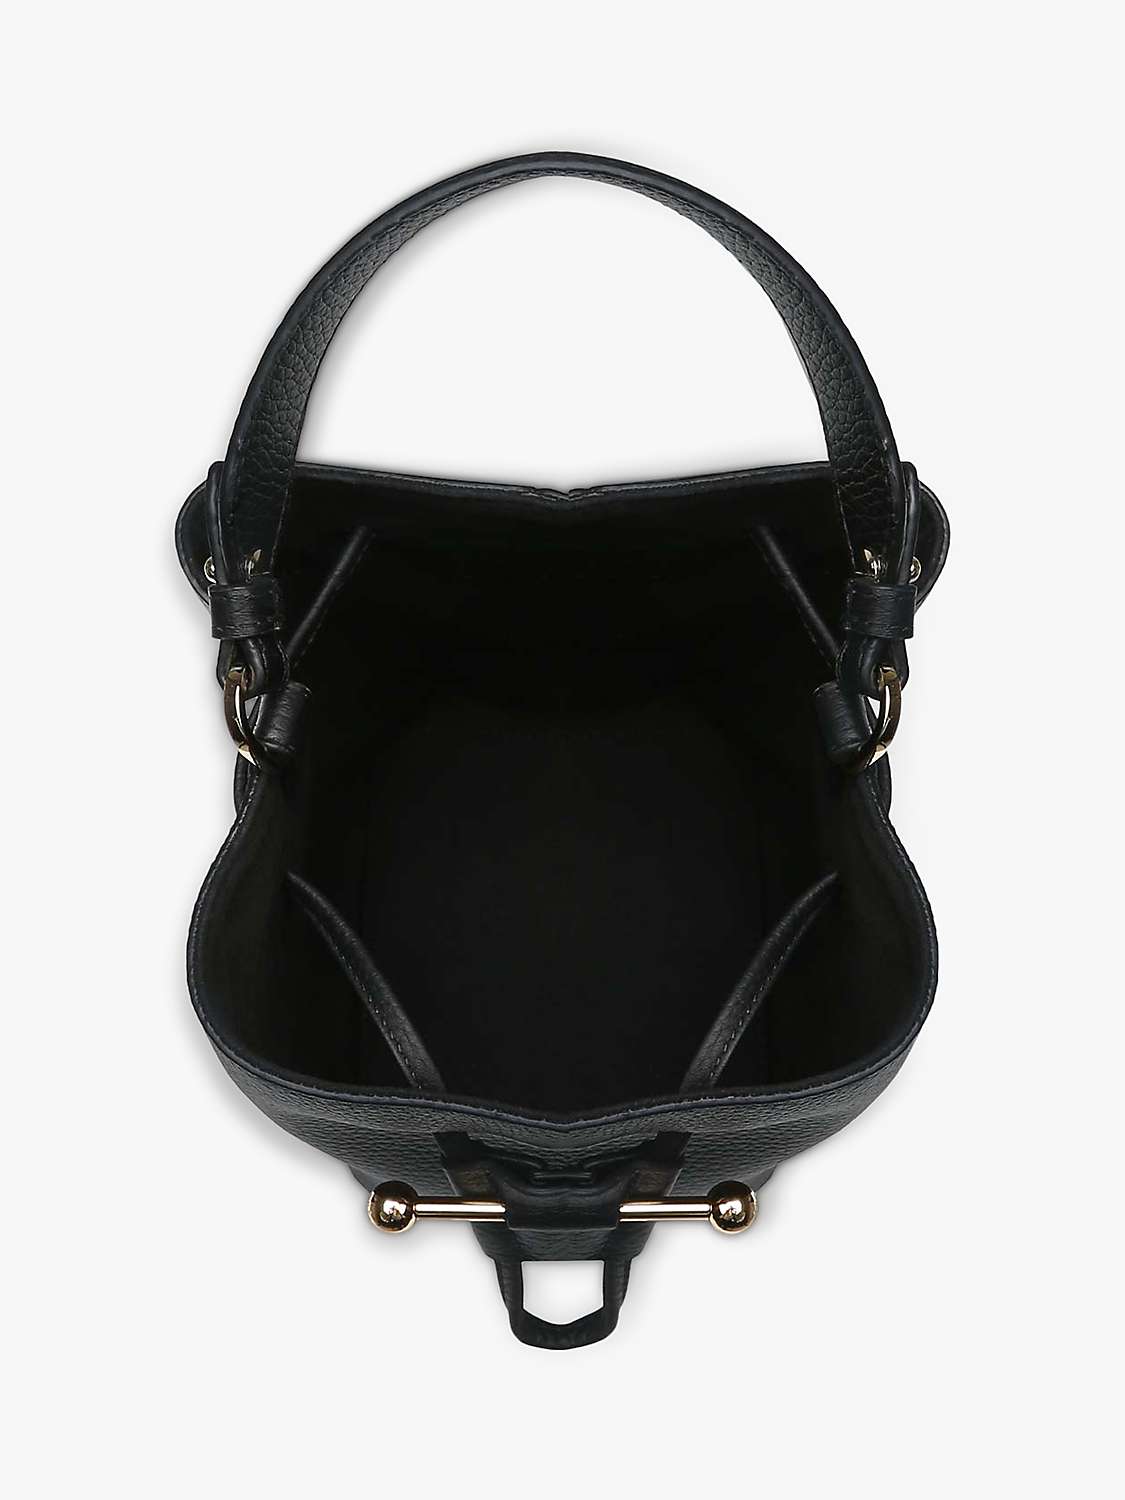 Buy Strathberry Lana Osette Handbag Online at johnlewis.com